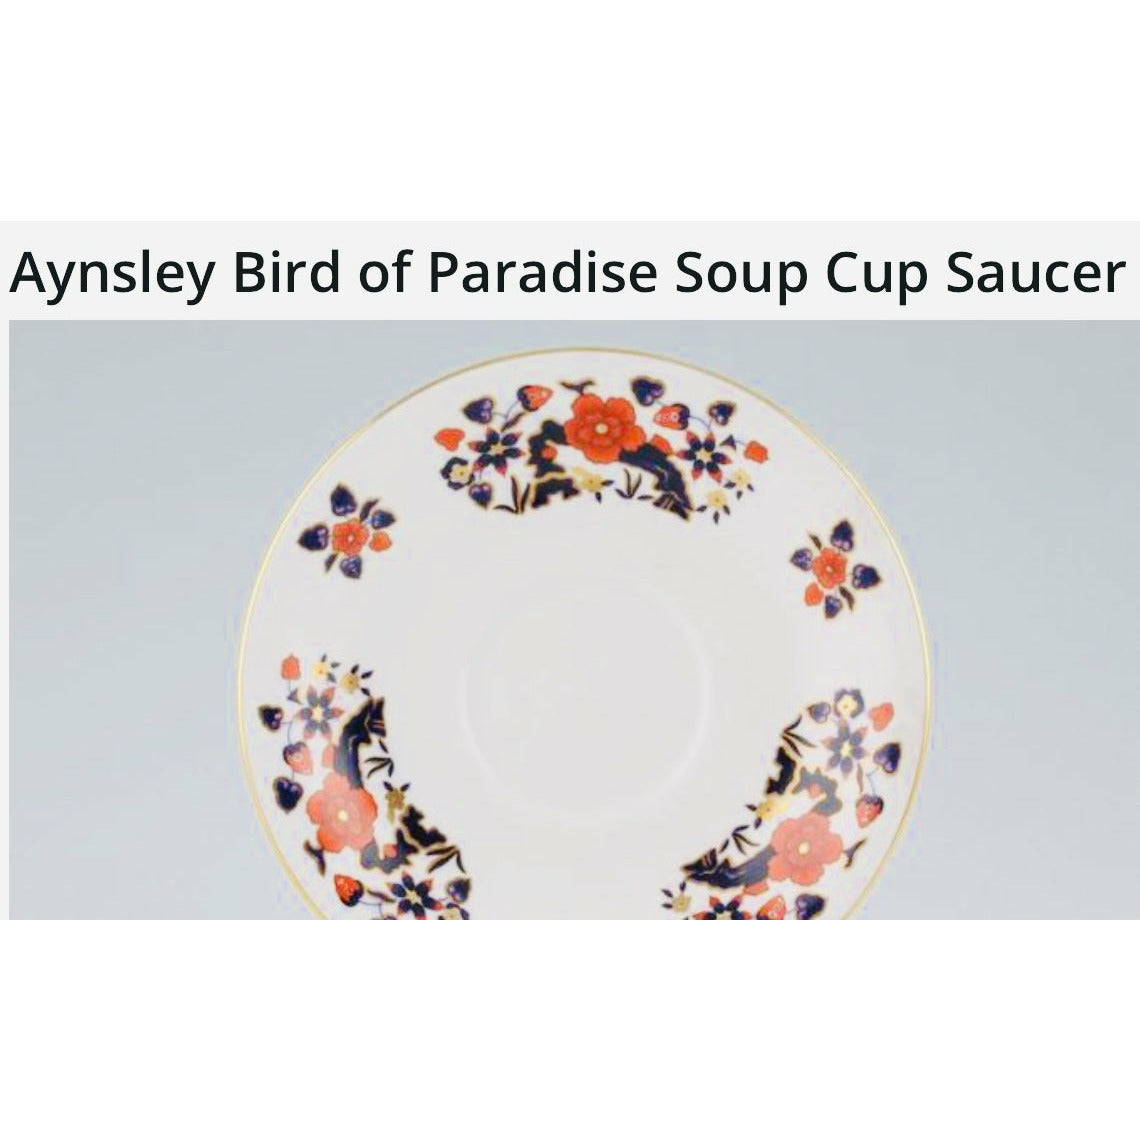 AYNSLEY “Birds of Paradise” Dinner Service